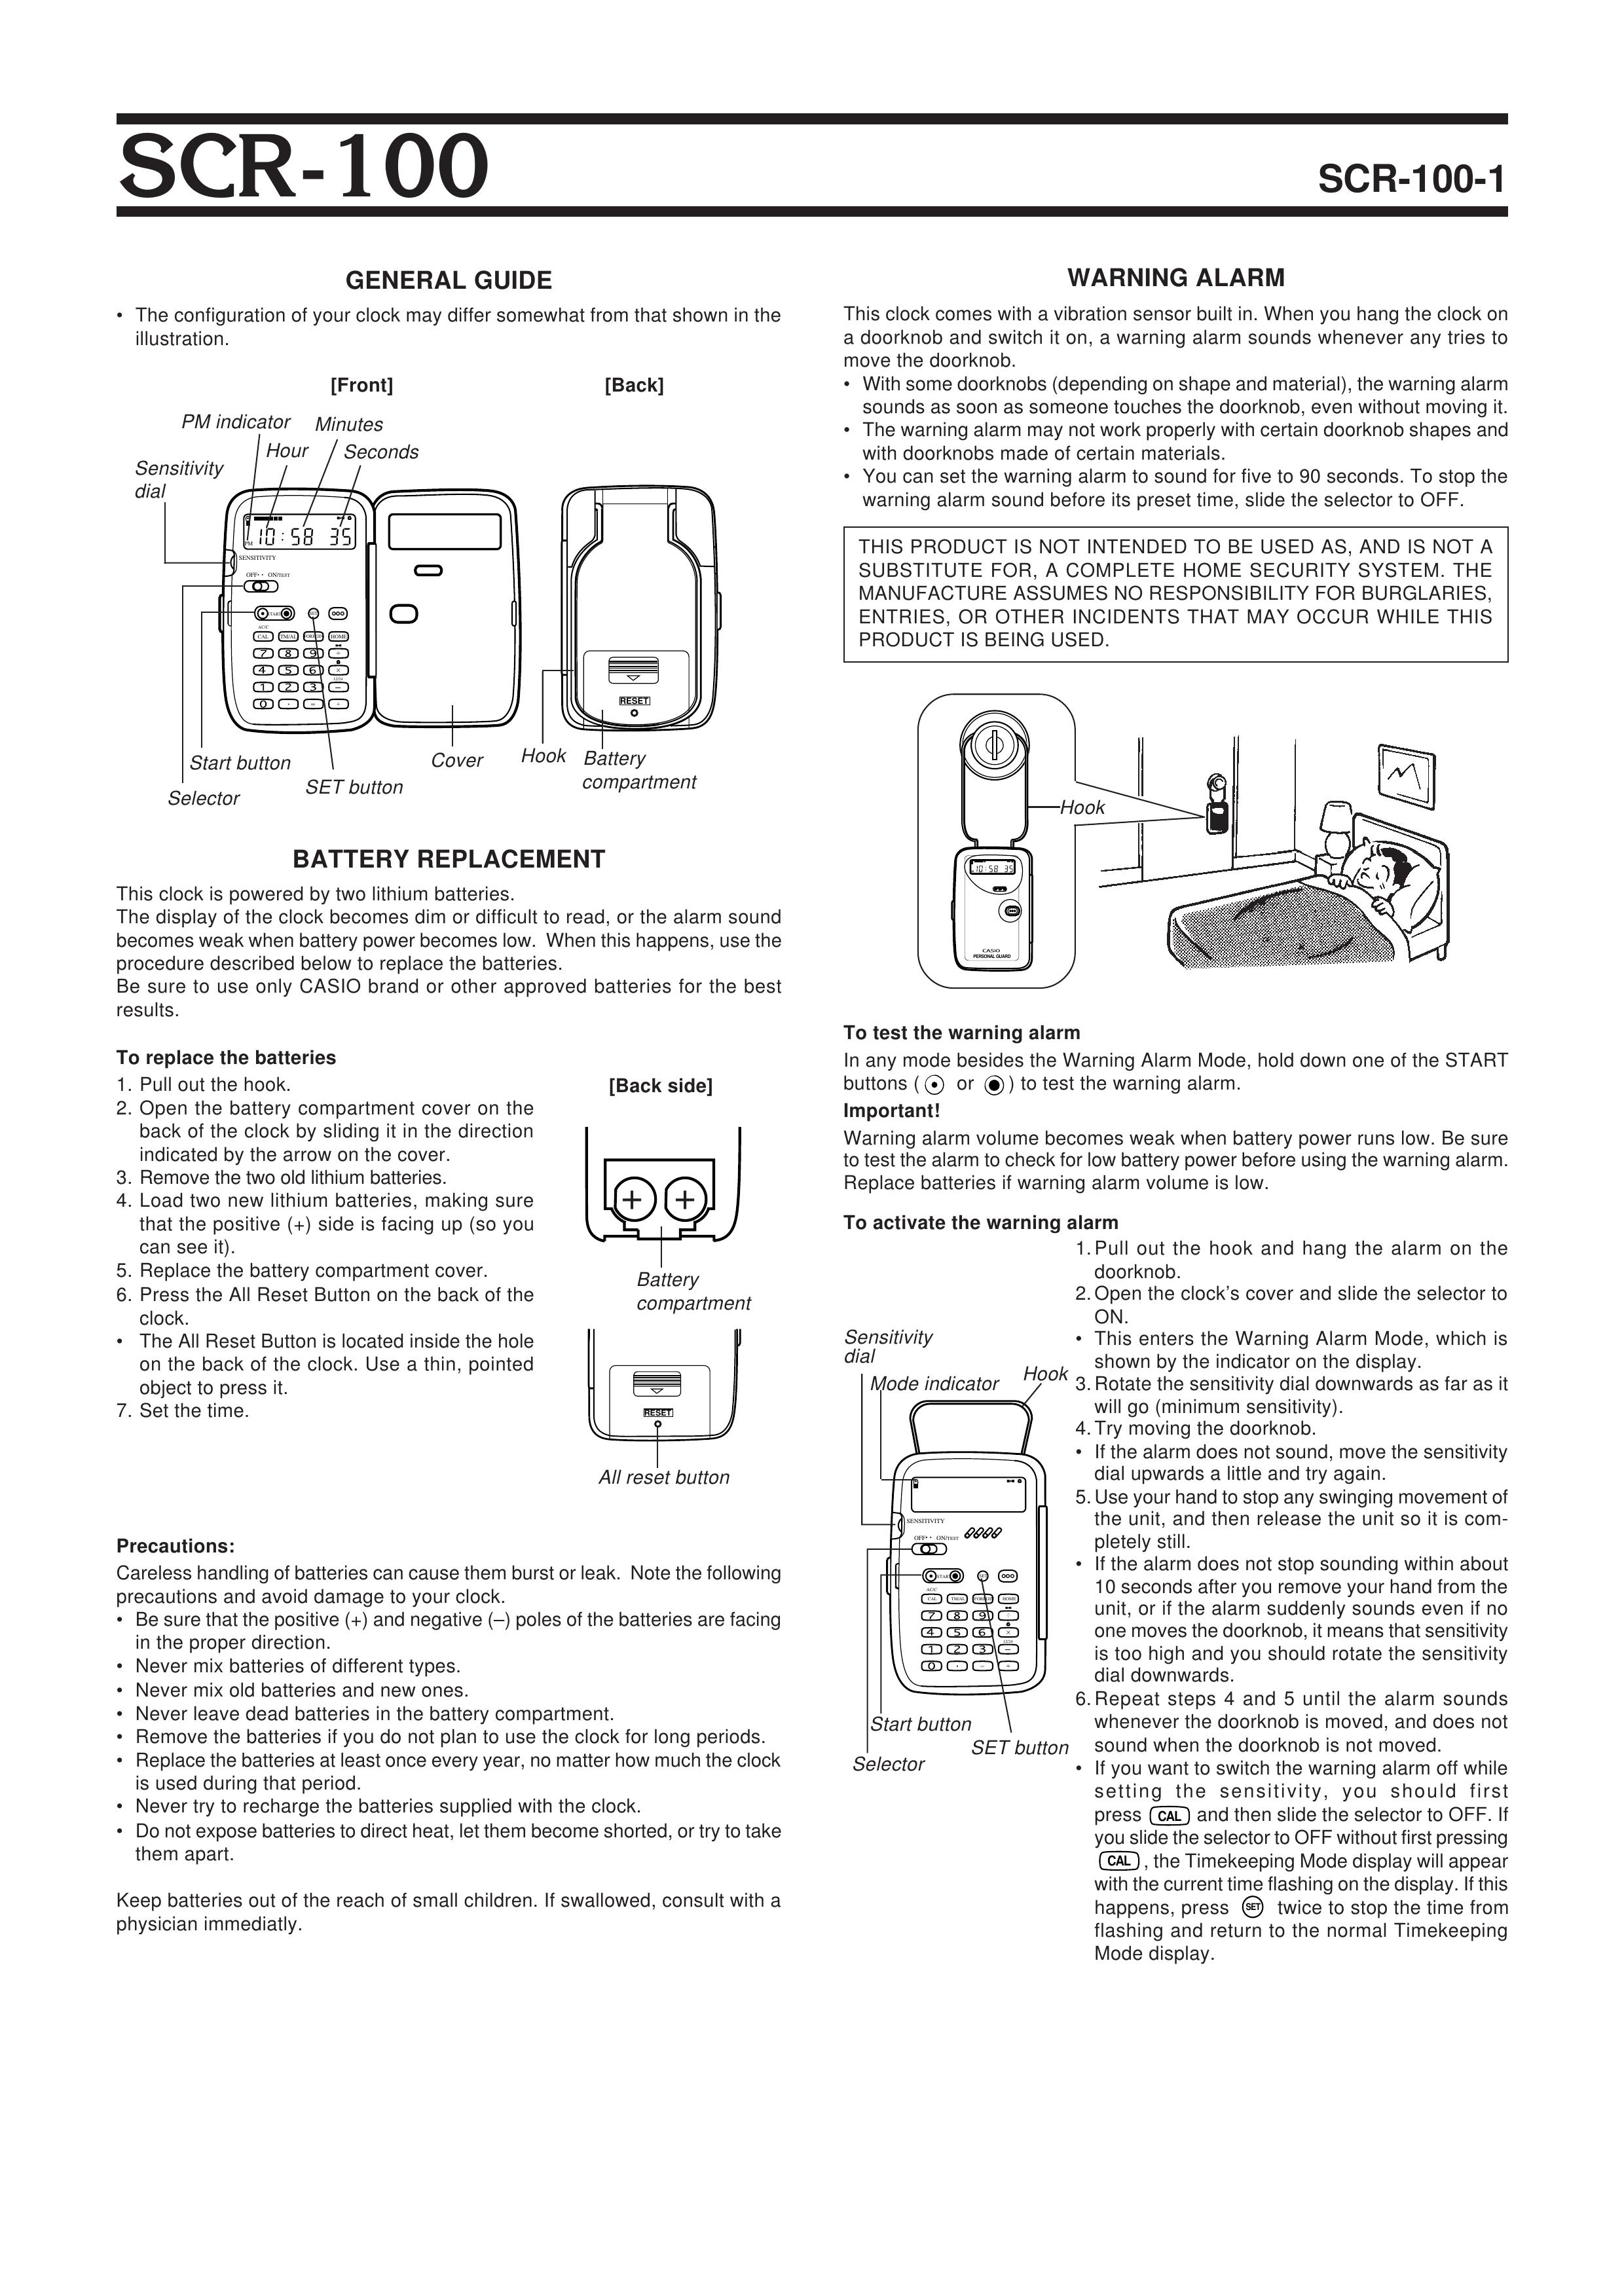 Casio SCR-100-1 Clock Radio User Manual